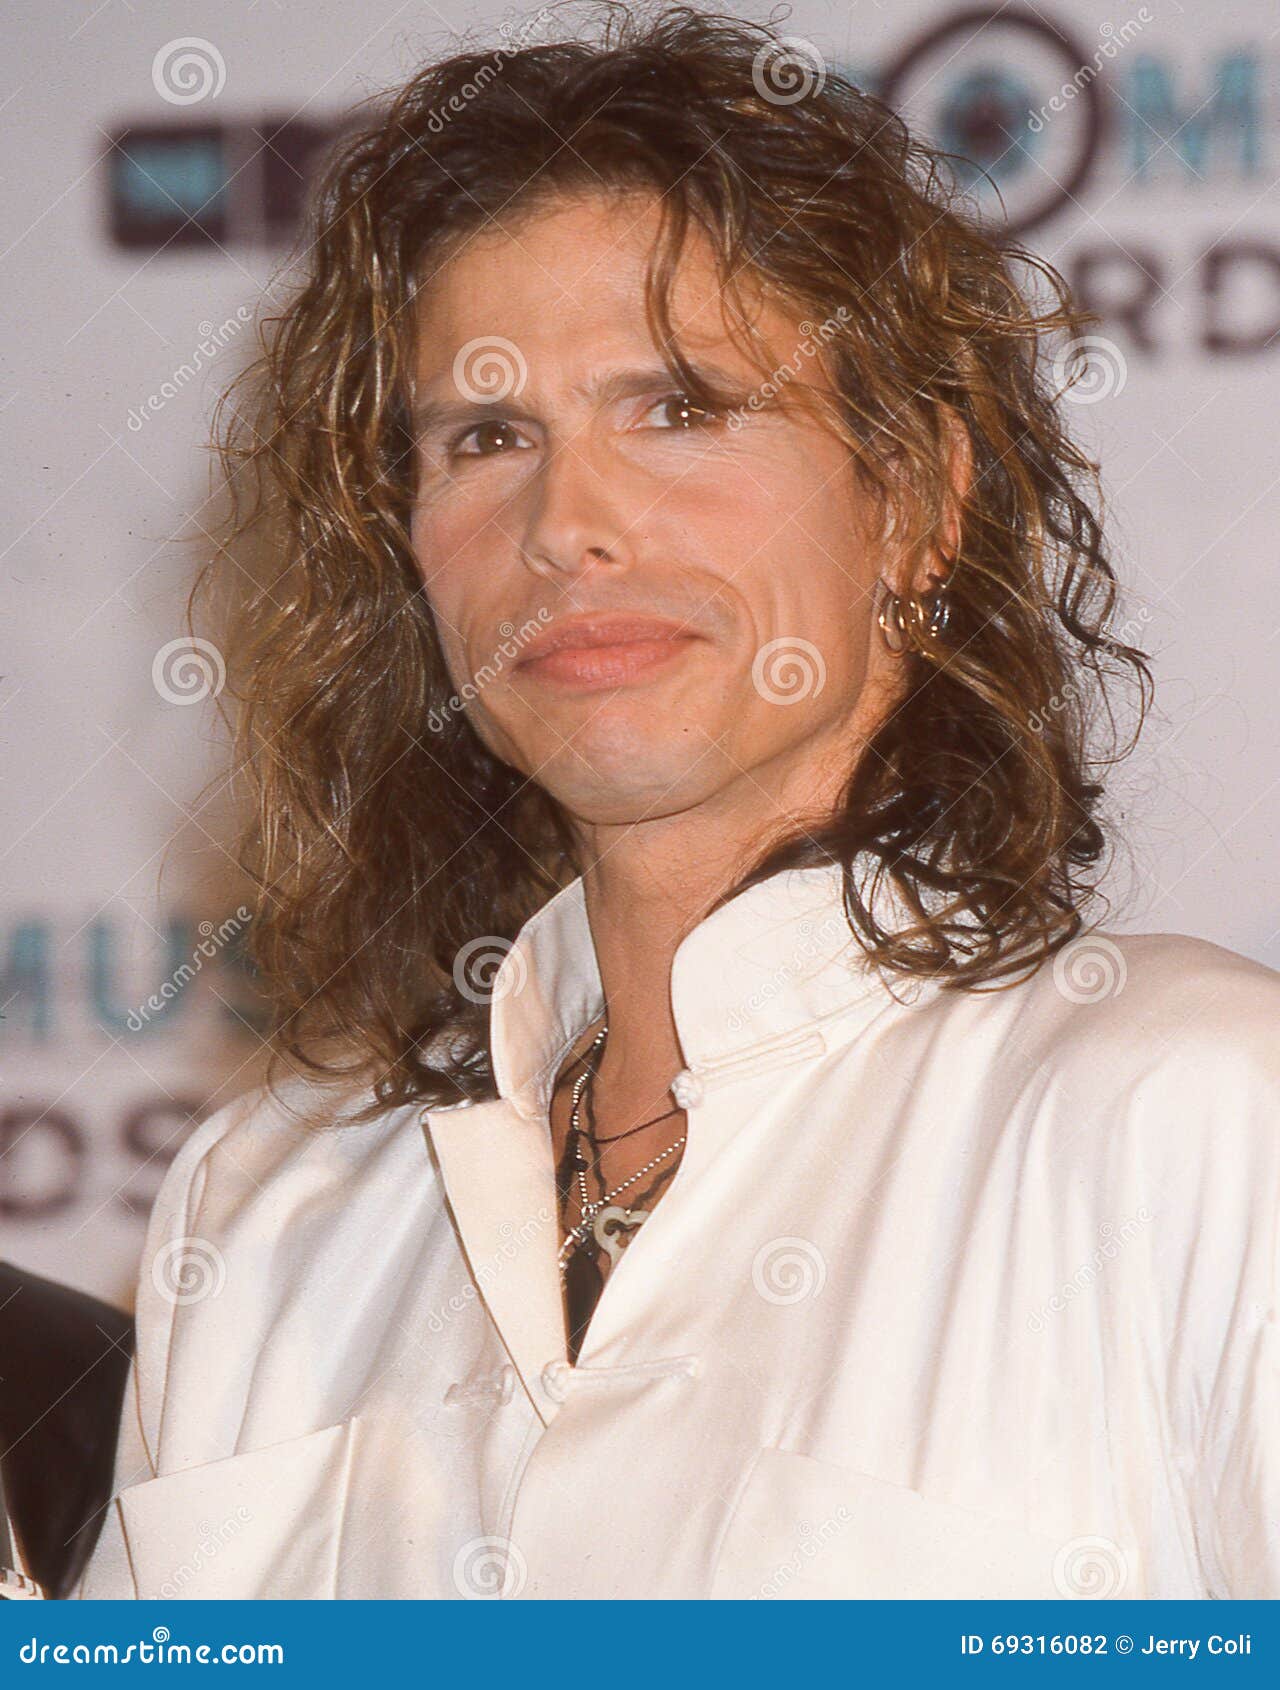 8x10 GLOSSY Photo Picture IMAGE #6 Steven Tyler Aerosmith 8 x 10